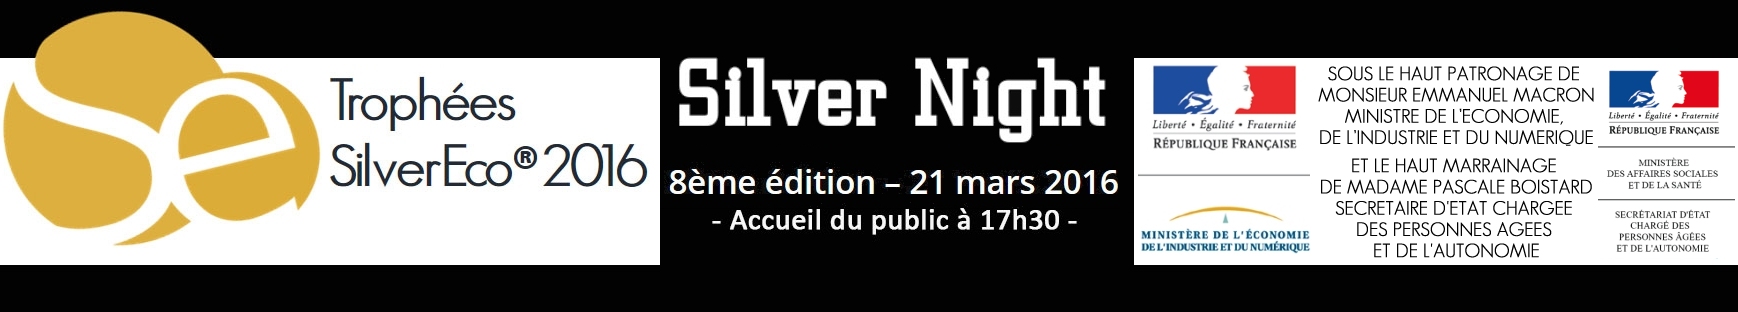 SilverNight 2016